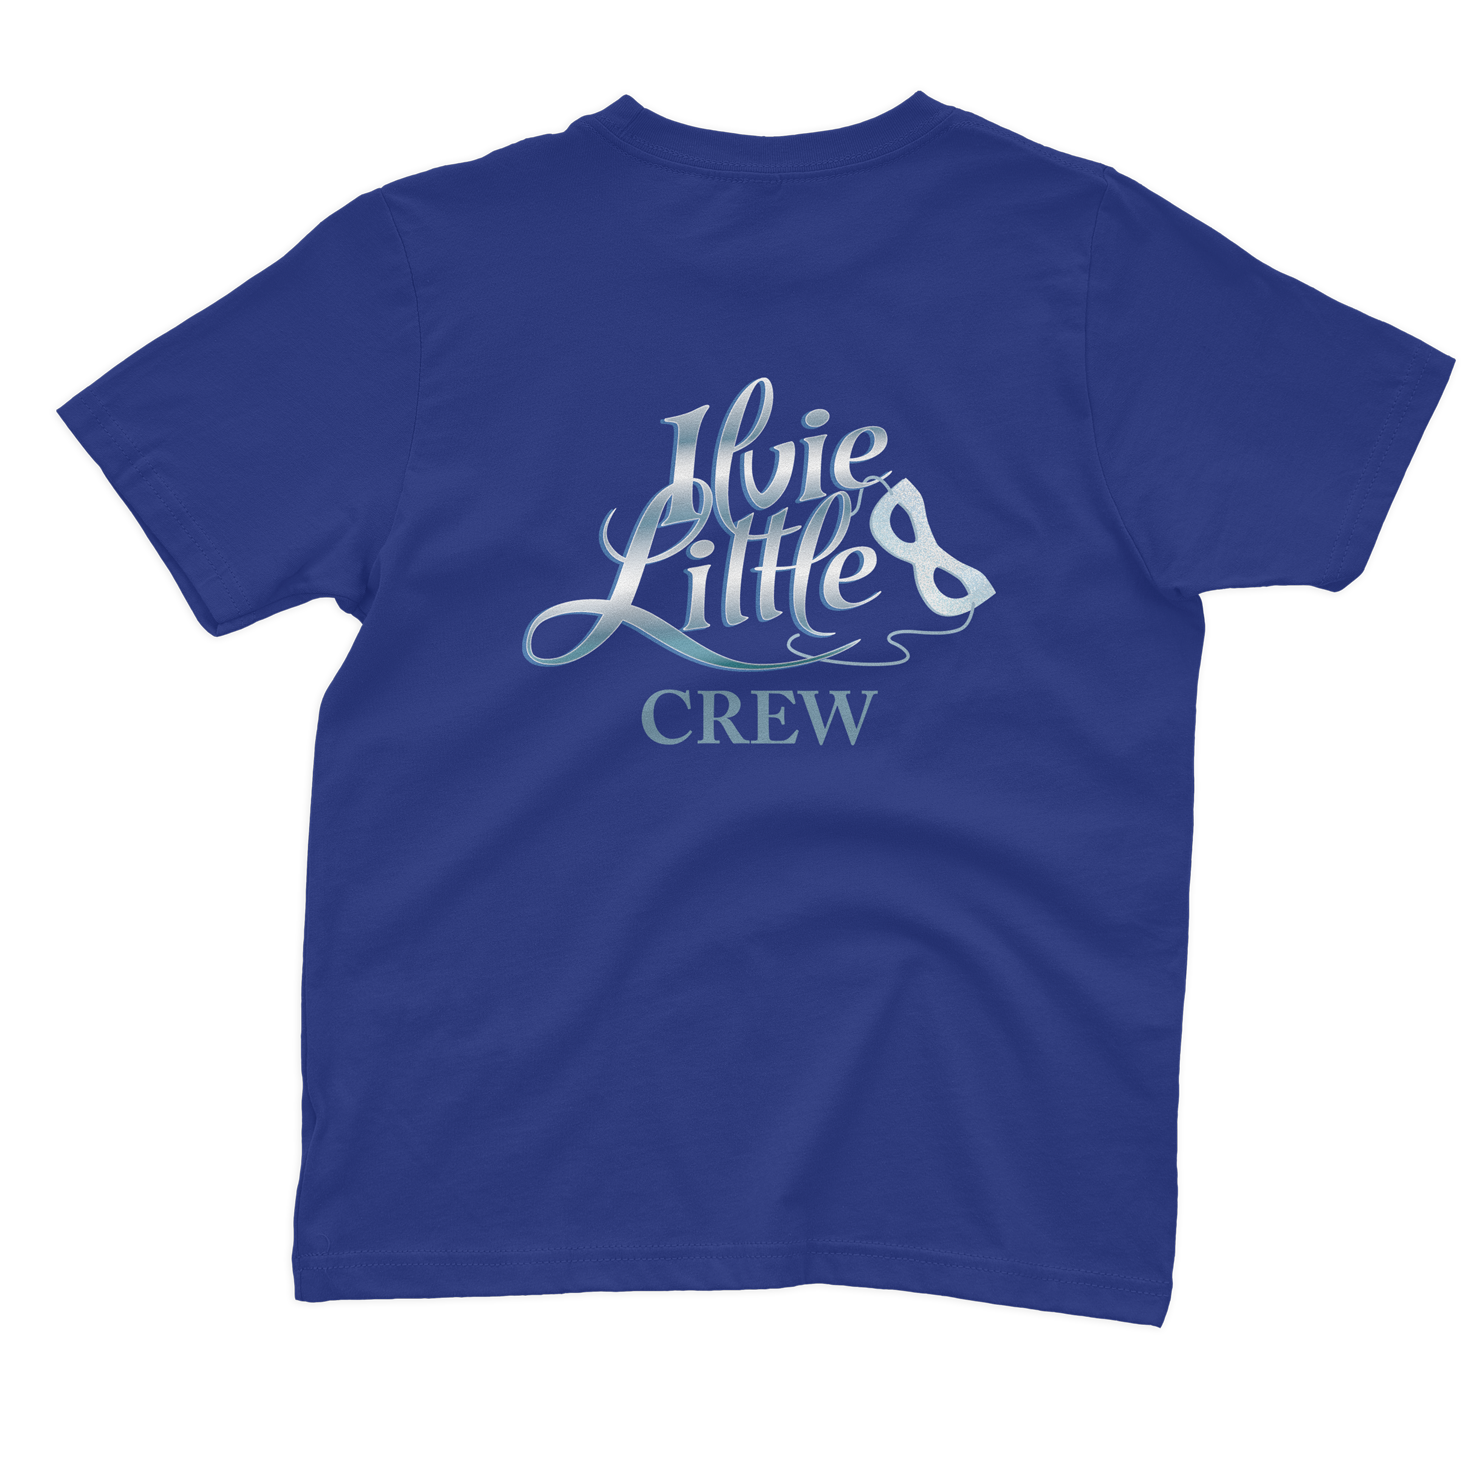 ILVIE LITTLE CREW T-Shirt (Teenager).